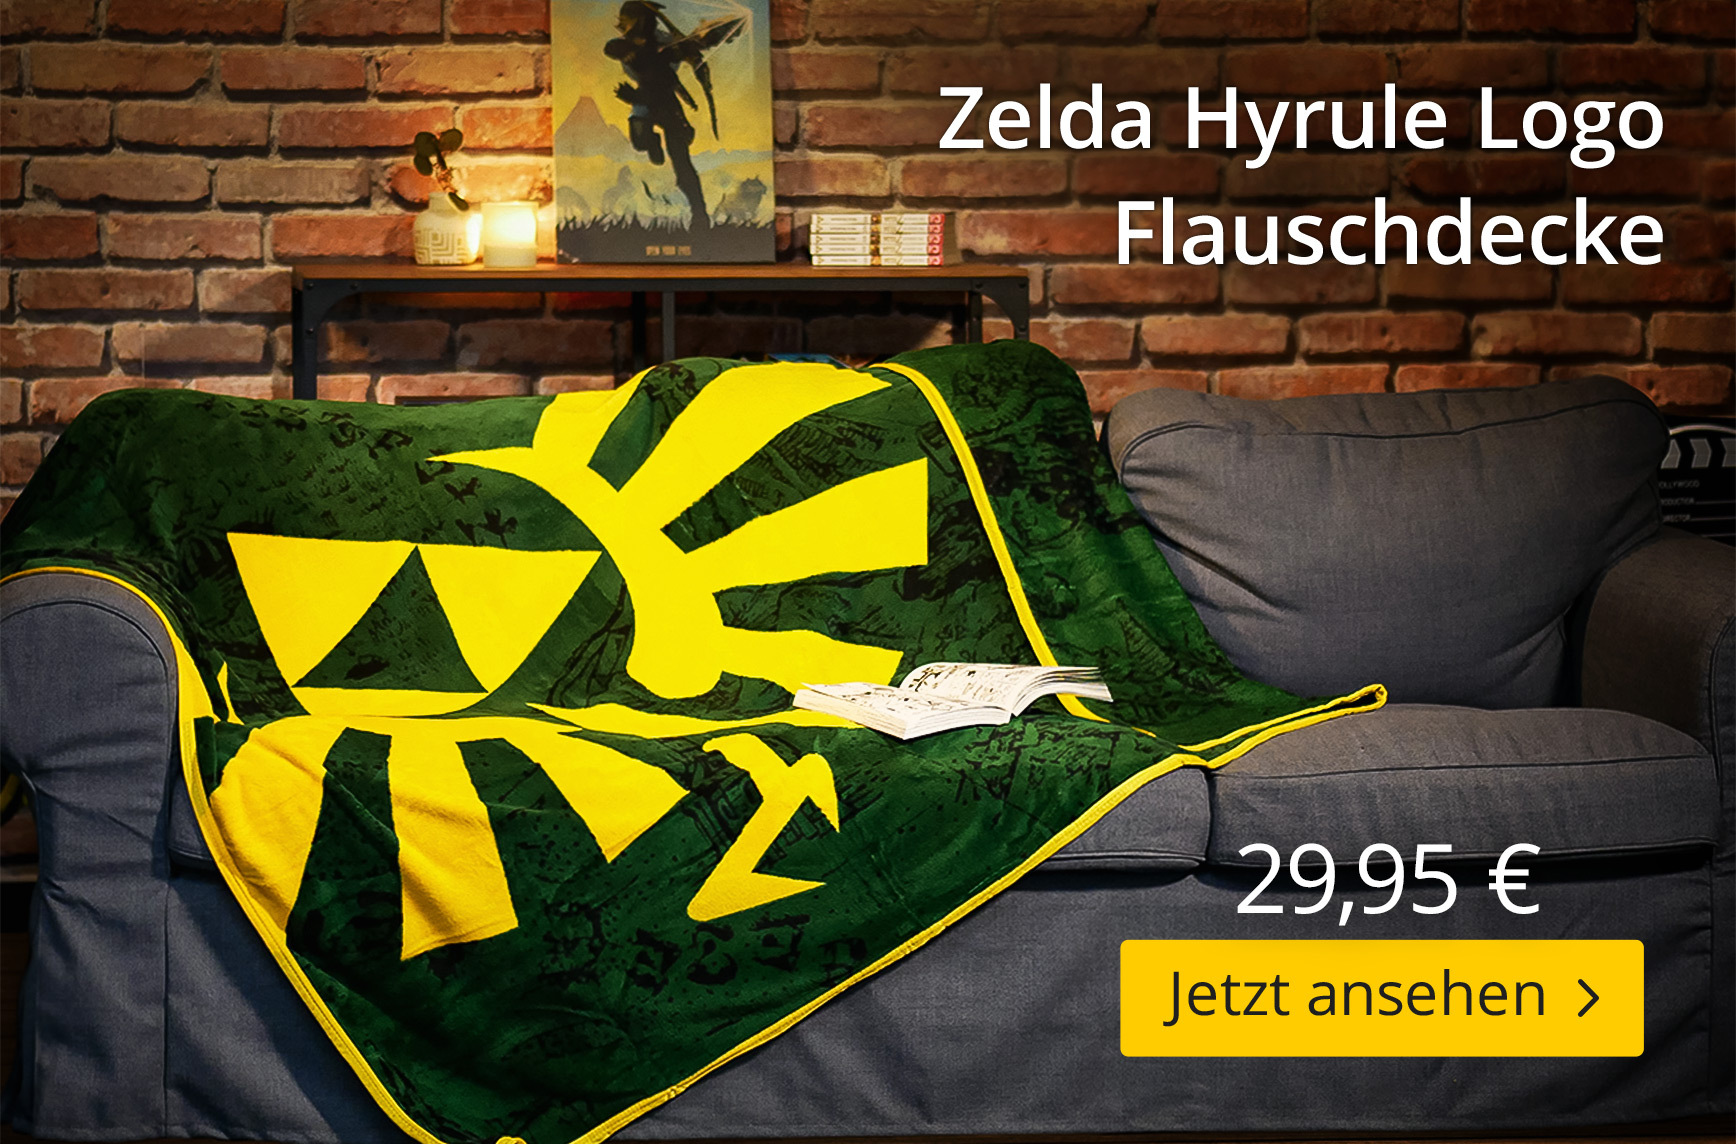 Zelda - Hyrule Logo Flauschdecke - 29,95 EUR